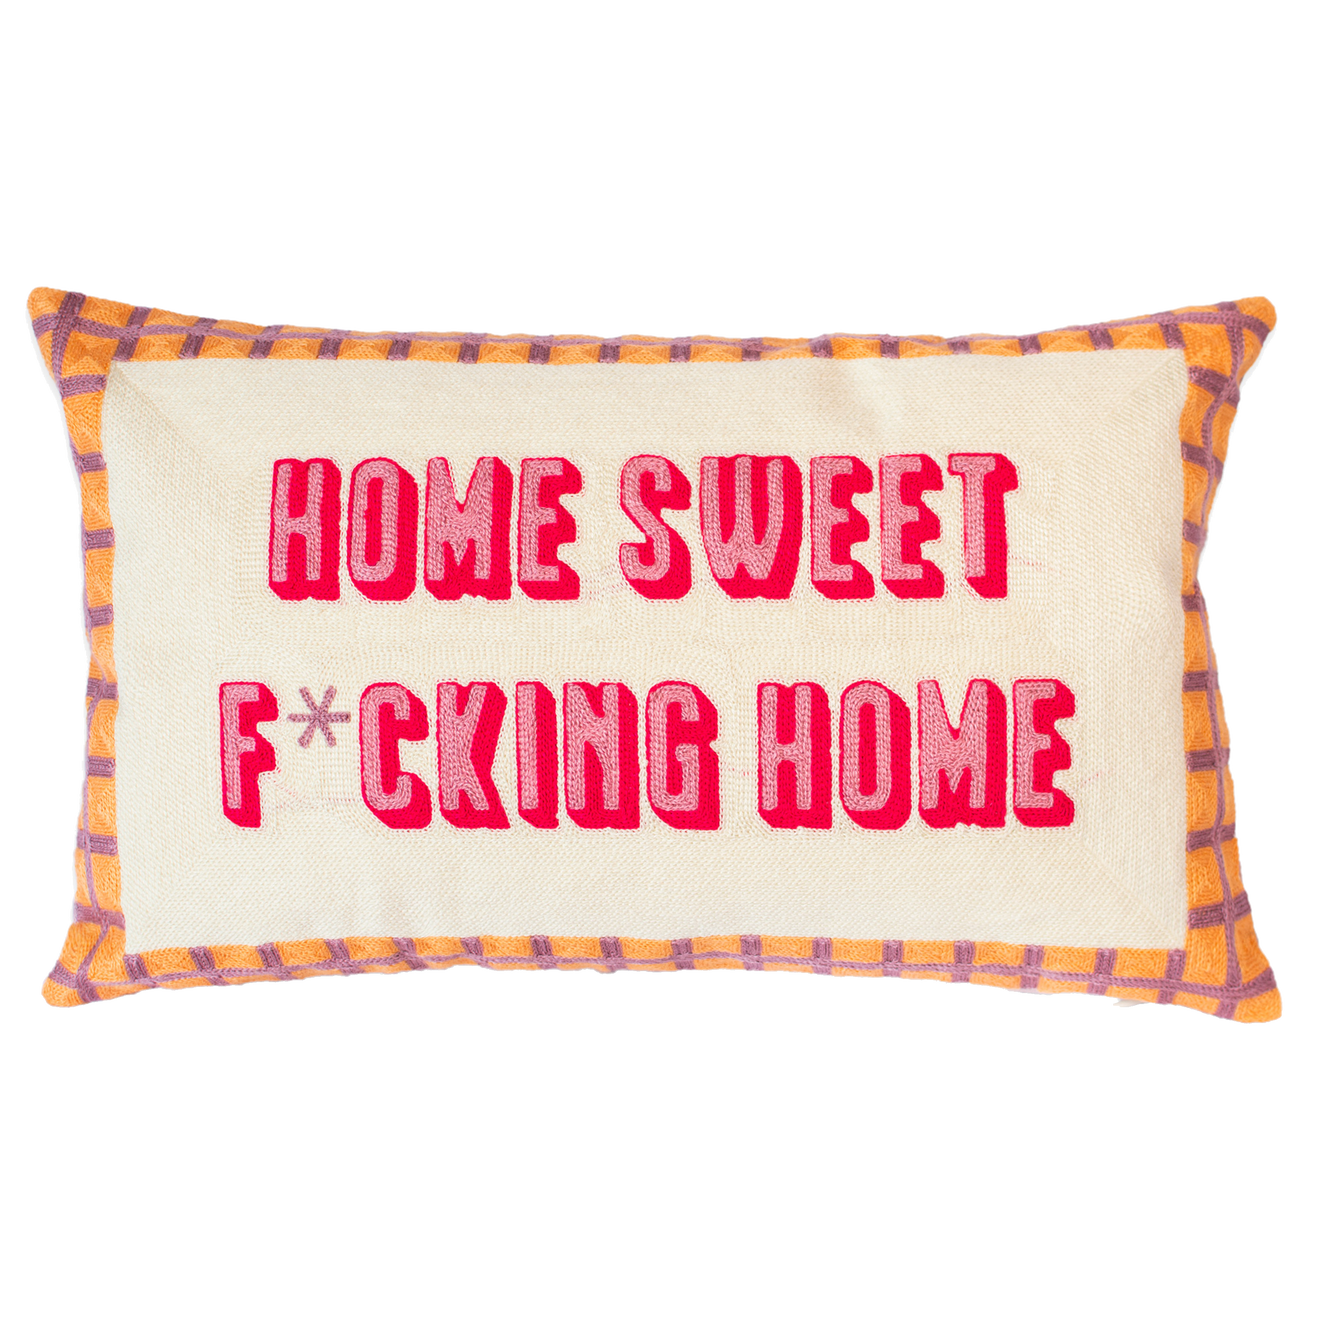 Home Sweet F*cking Home Needlepoint Cushion